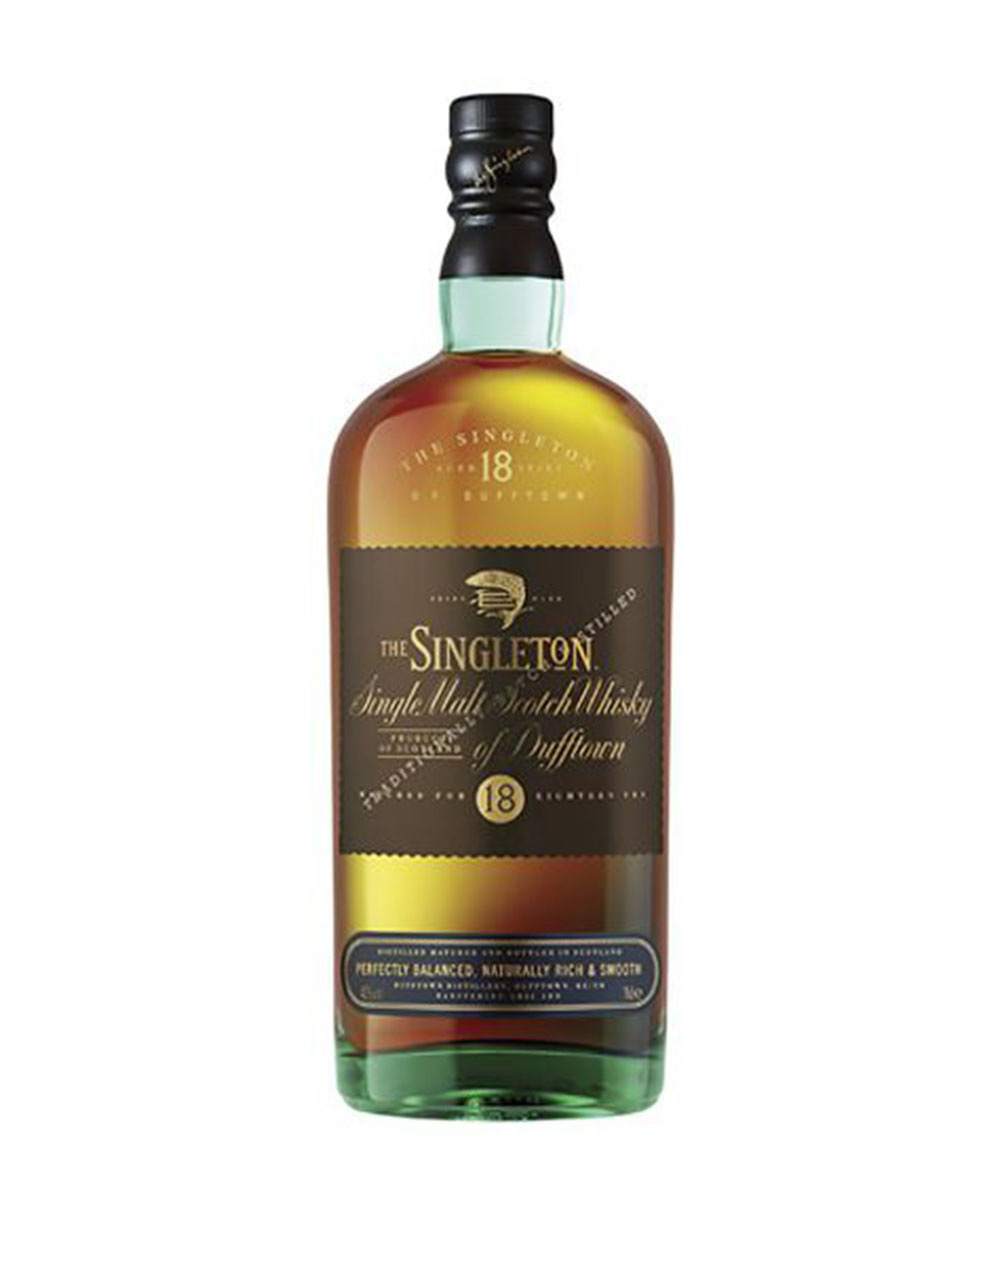 The Singleton of Dufftown 18 Year Old Single Malt Scotch Whisky